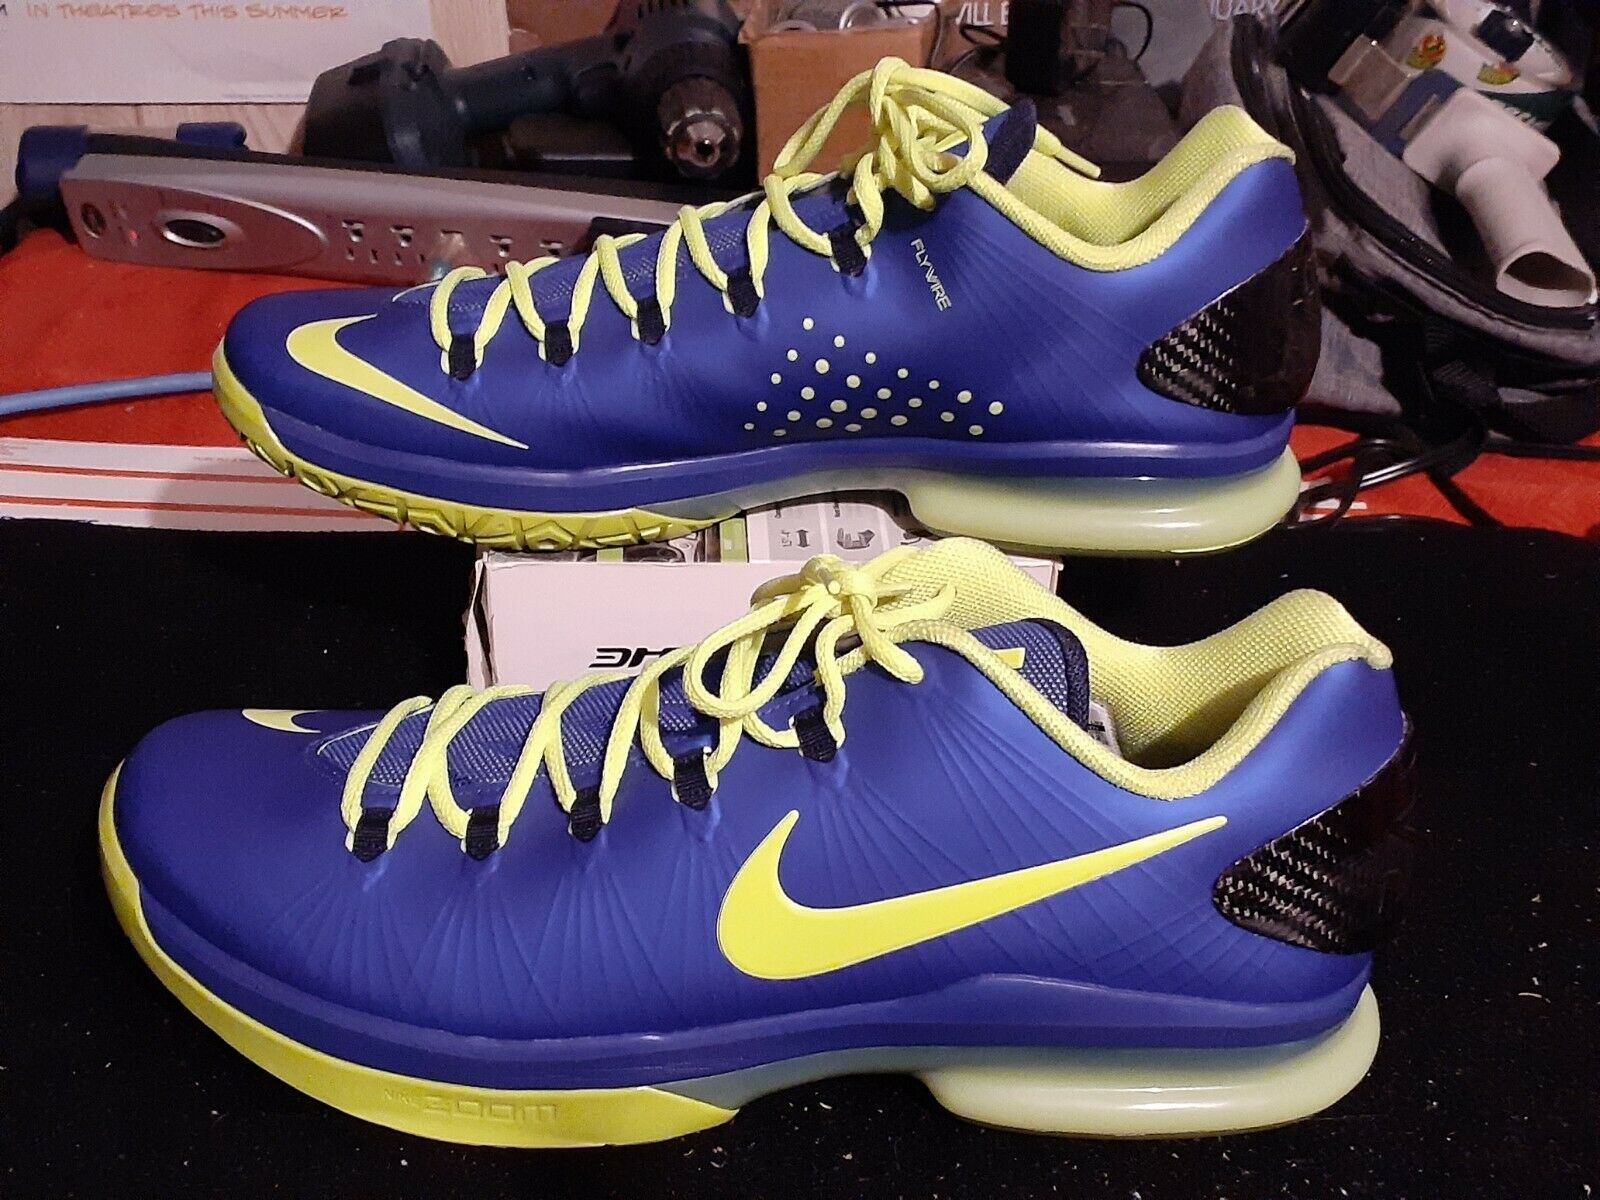 Nike KD 5 Elite Superhero Hyper Blue Volt Men's basketball shoes size 14 w/ box